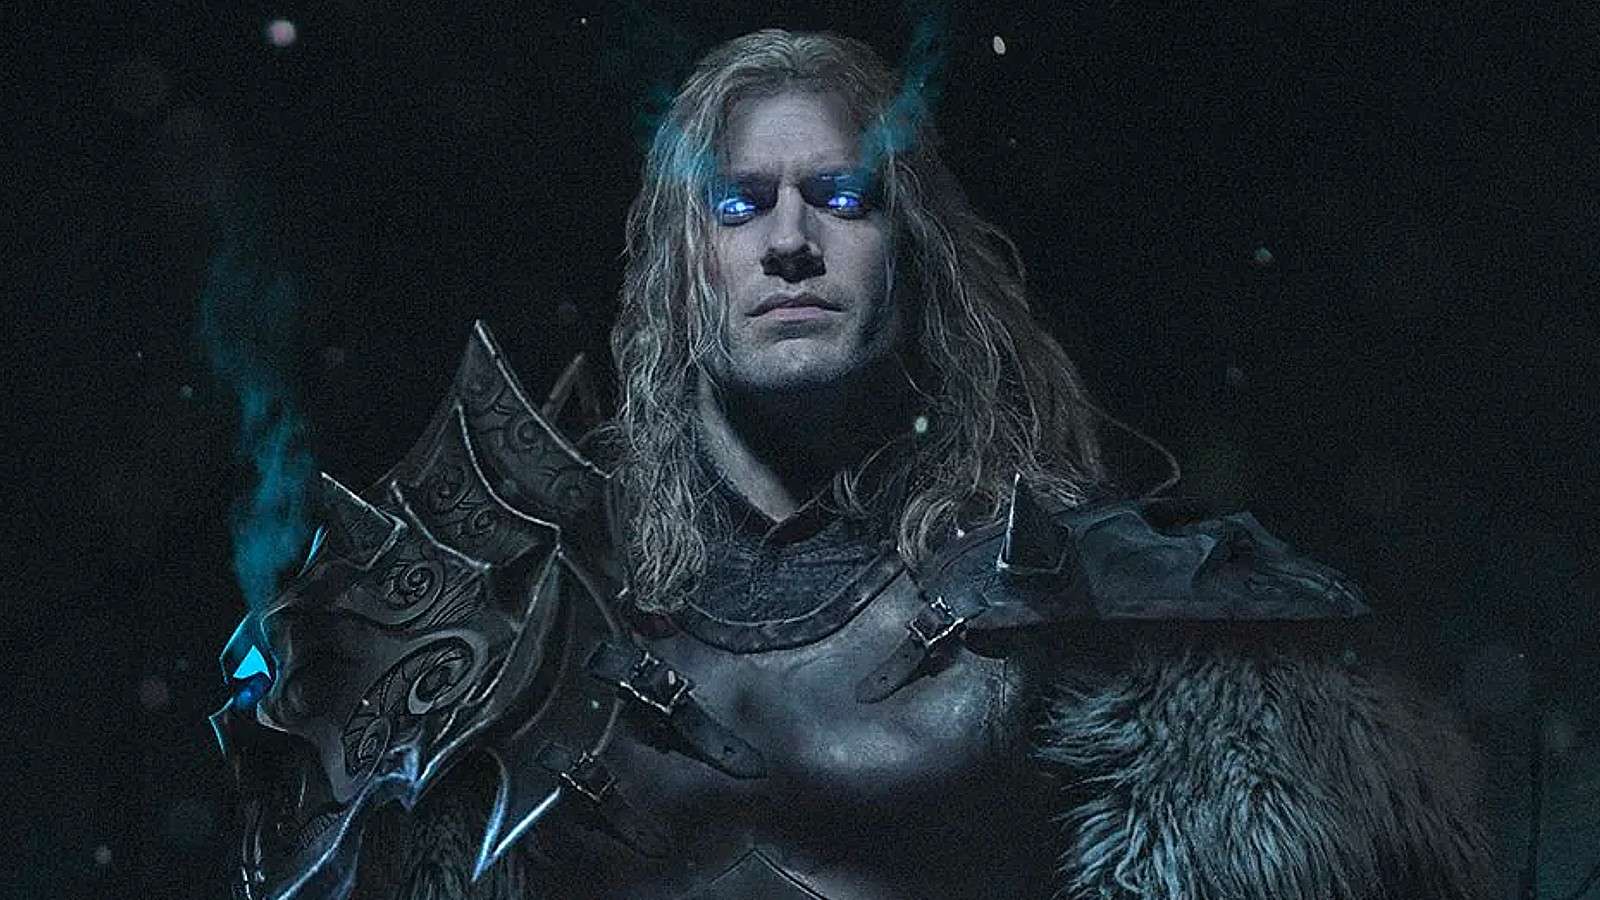 Henry Cavill stylized as World of Warcraft's Arthas